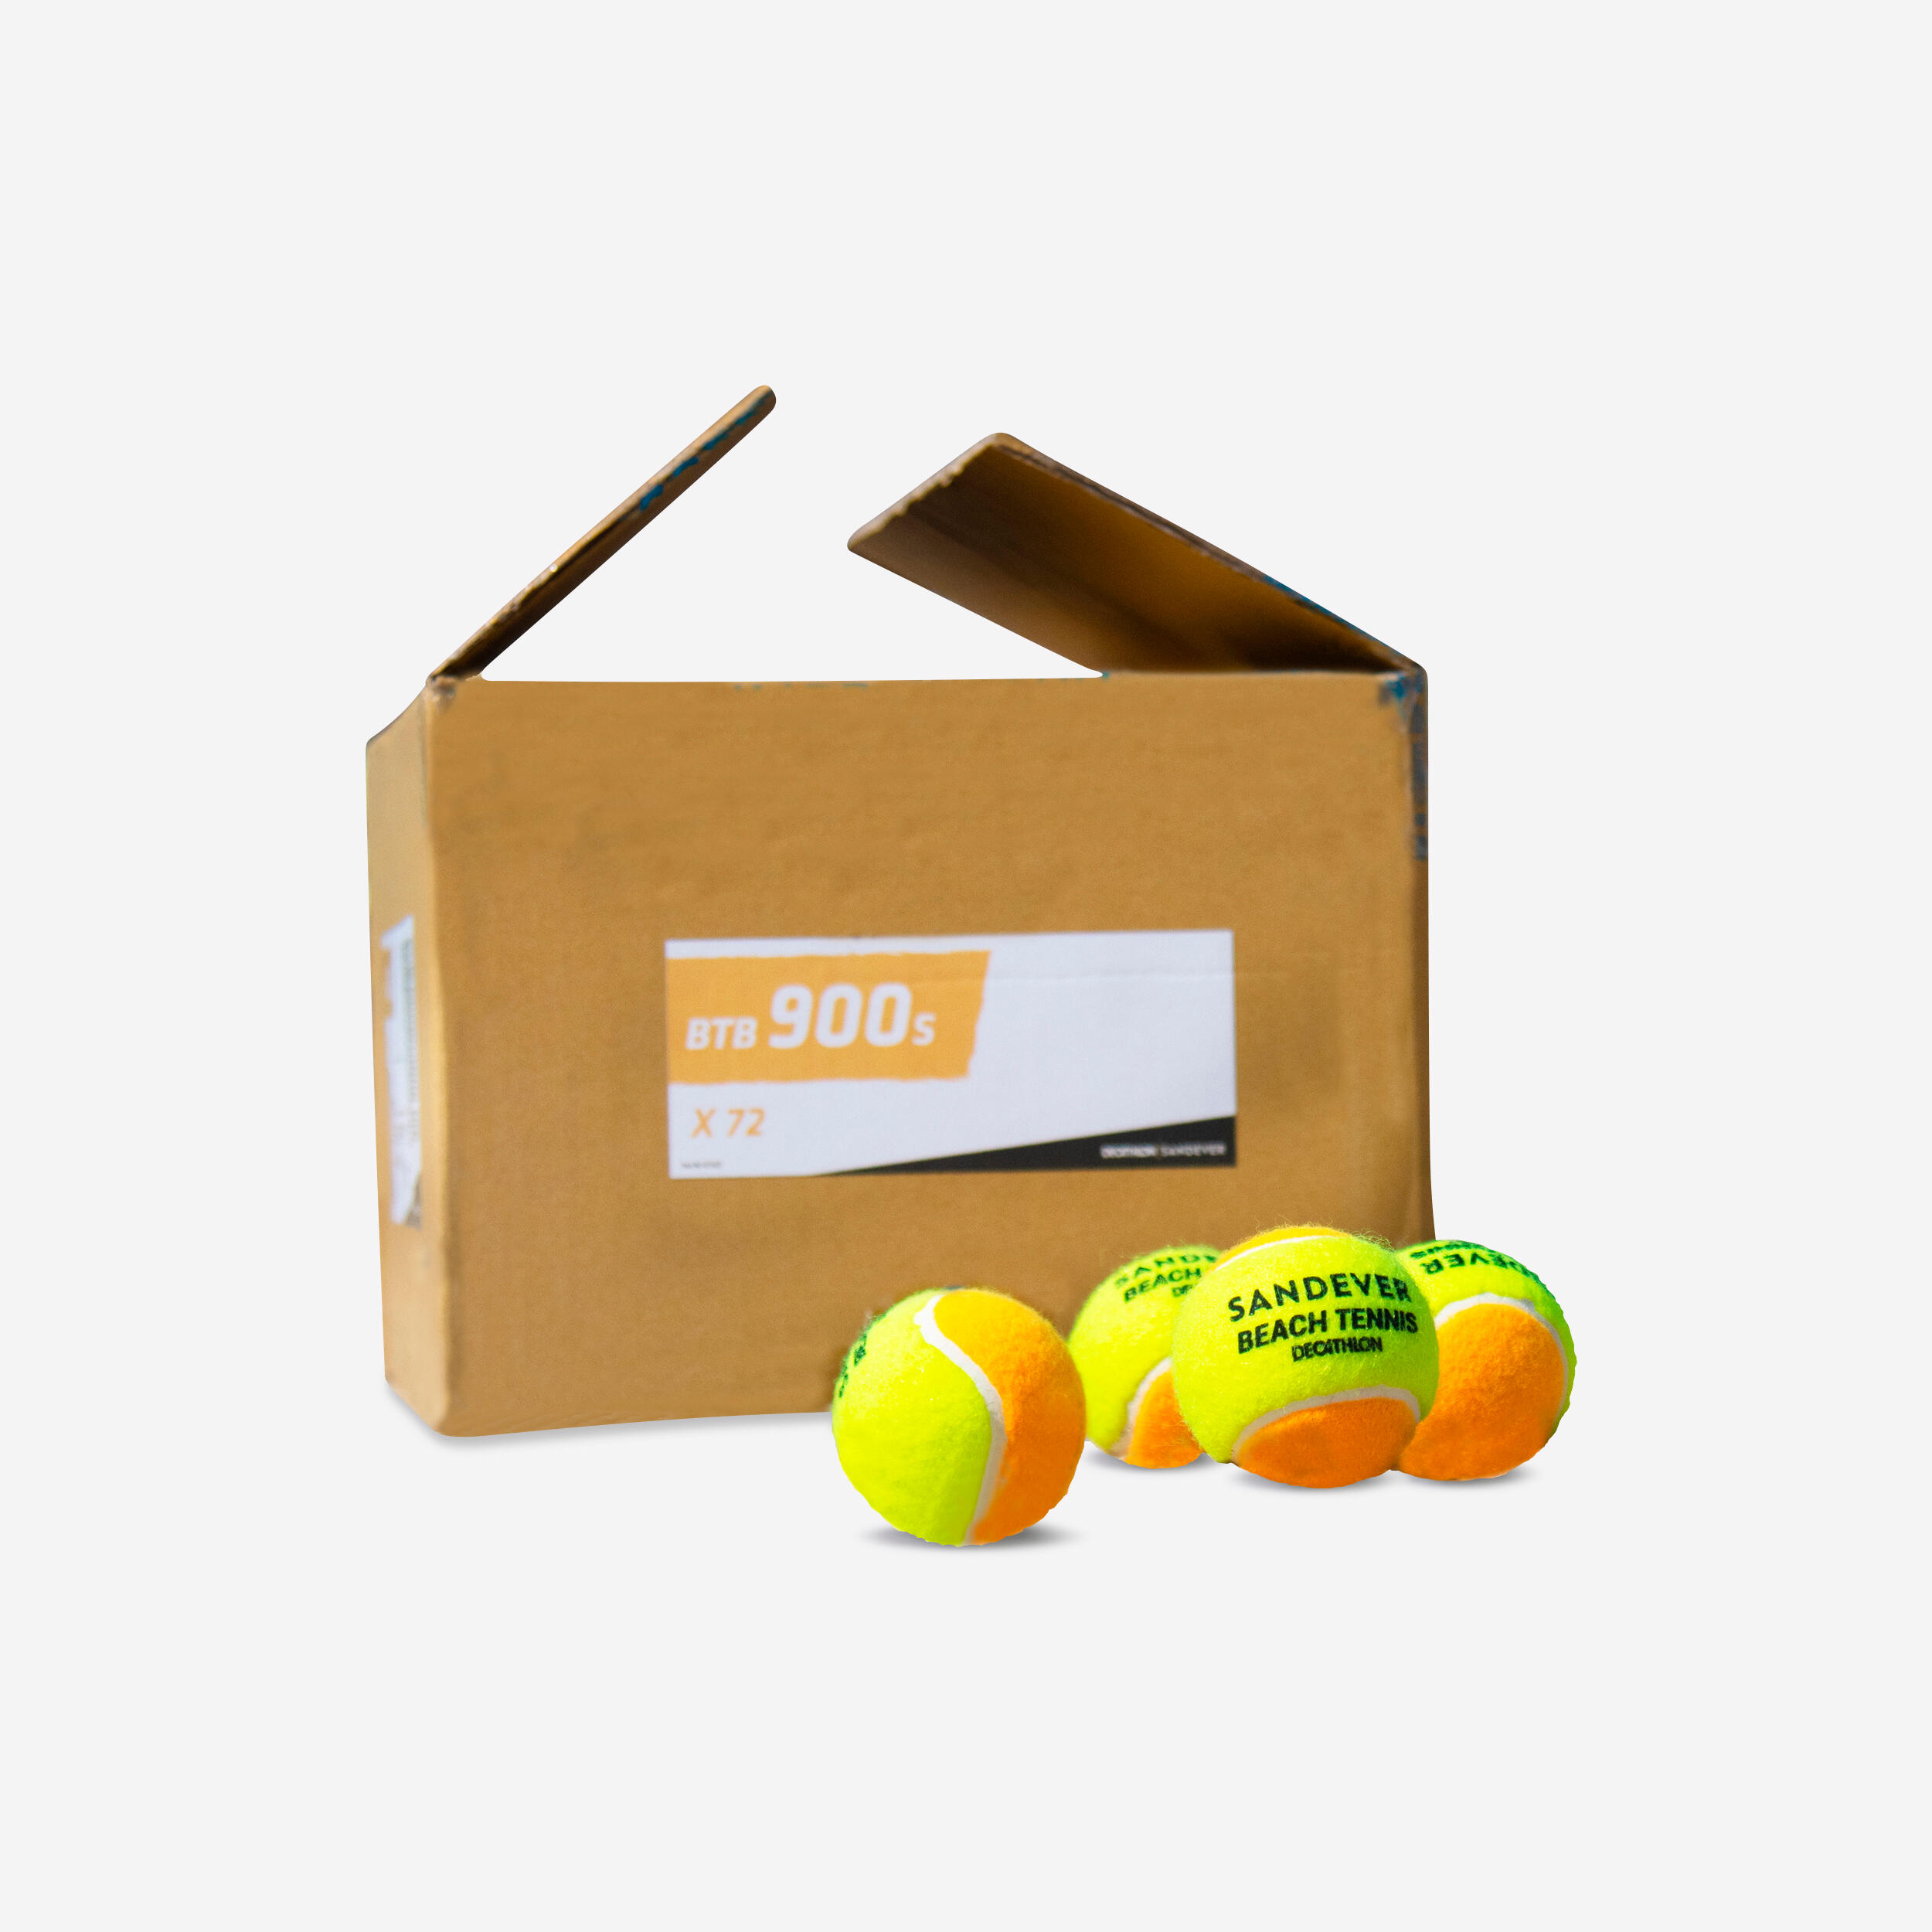 Beach Tennis Ball Set of 72 BTB 900 S - Orange 1/3